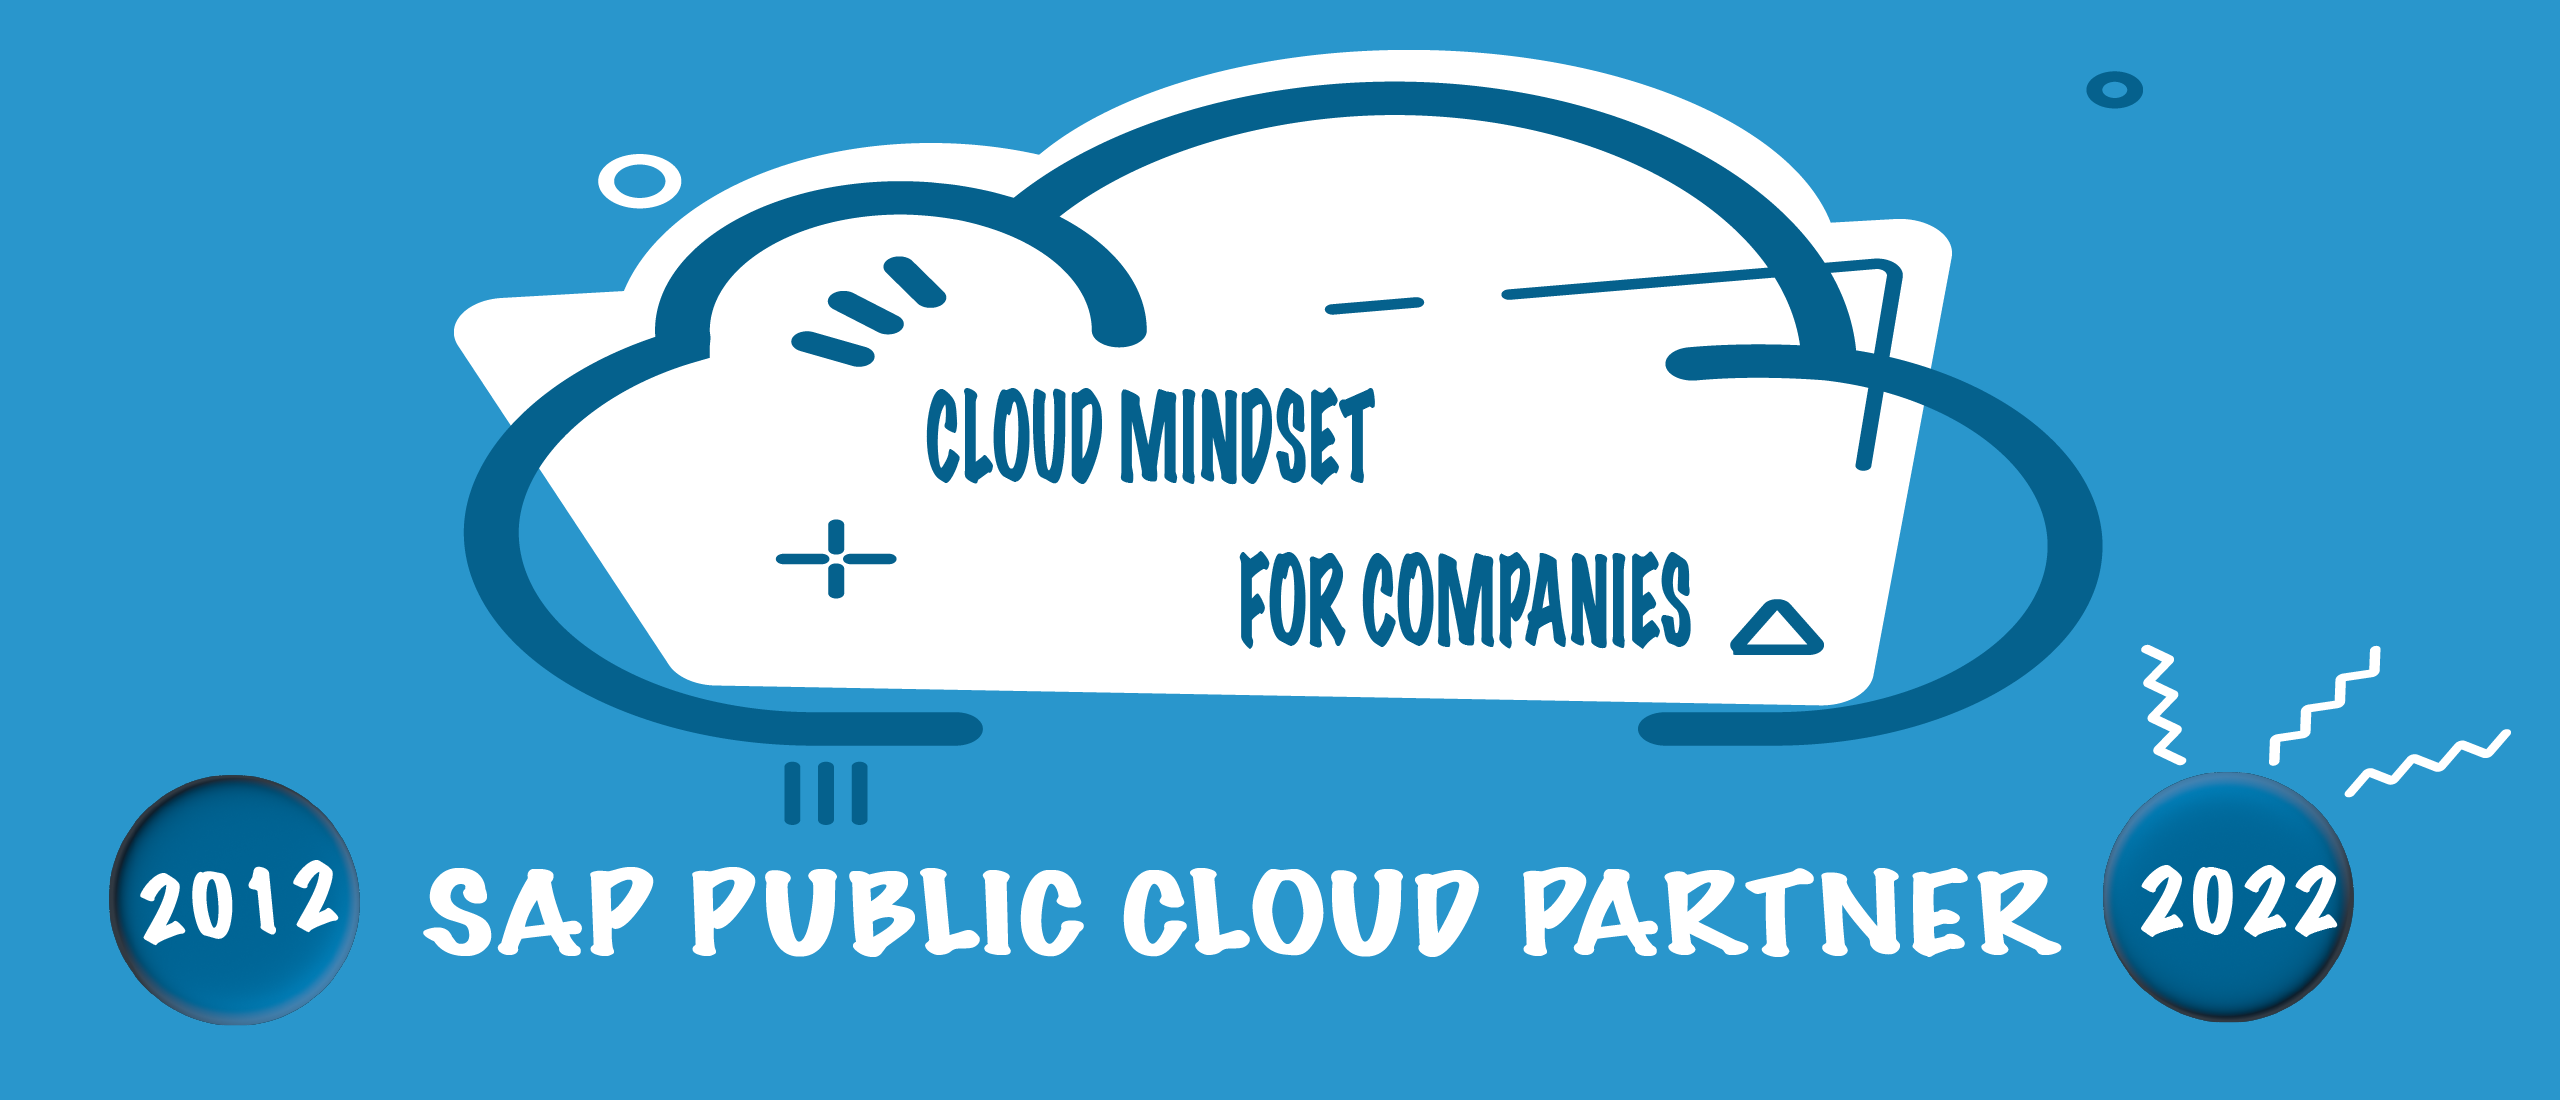 Cloud Mindset for Companies